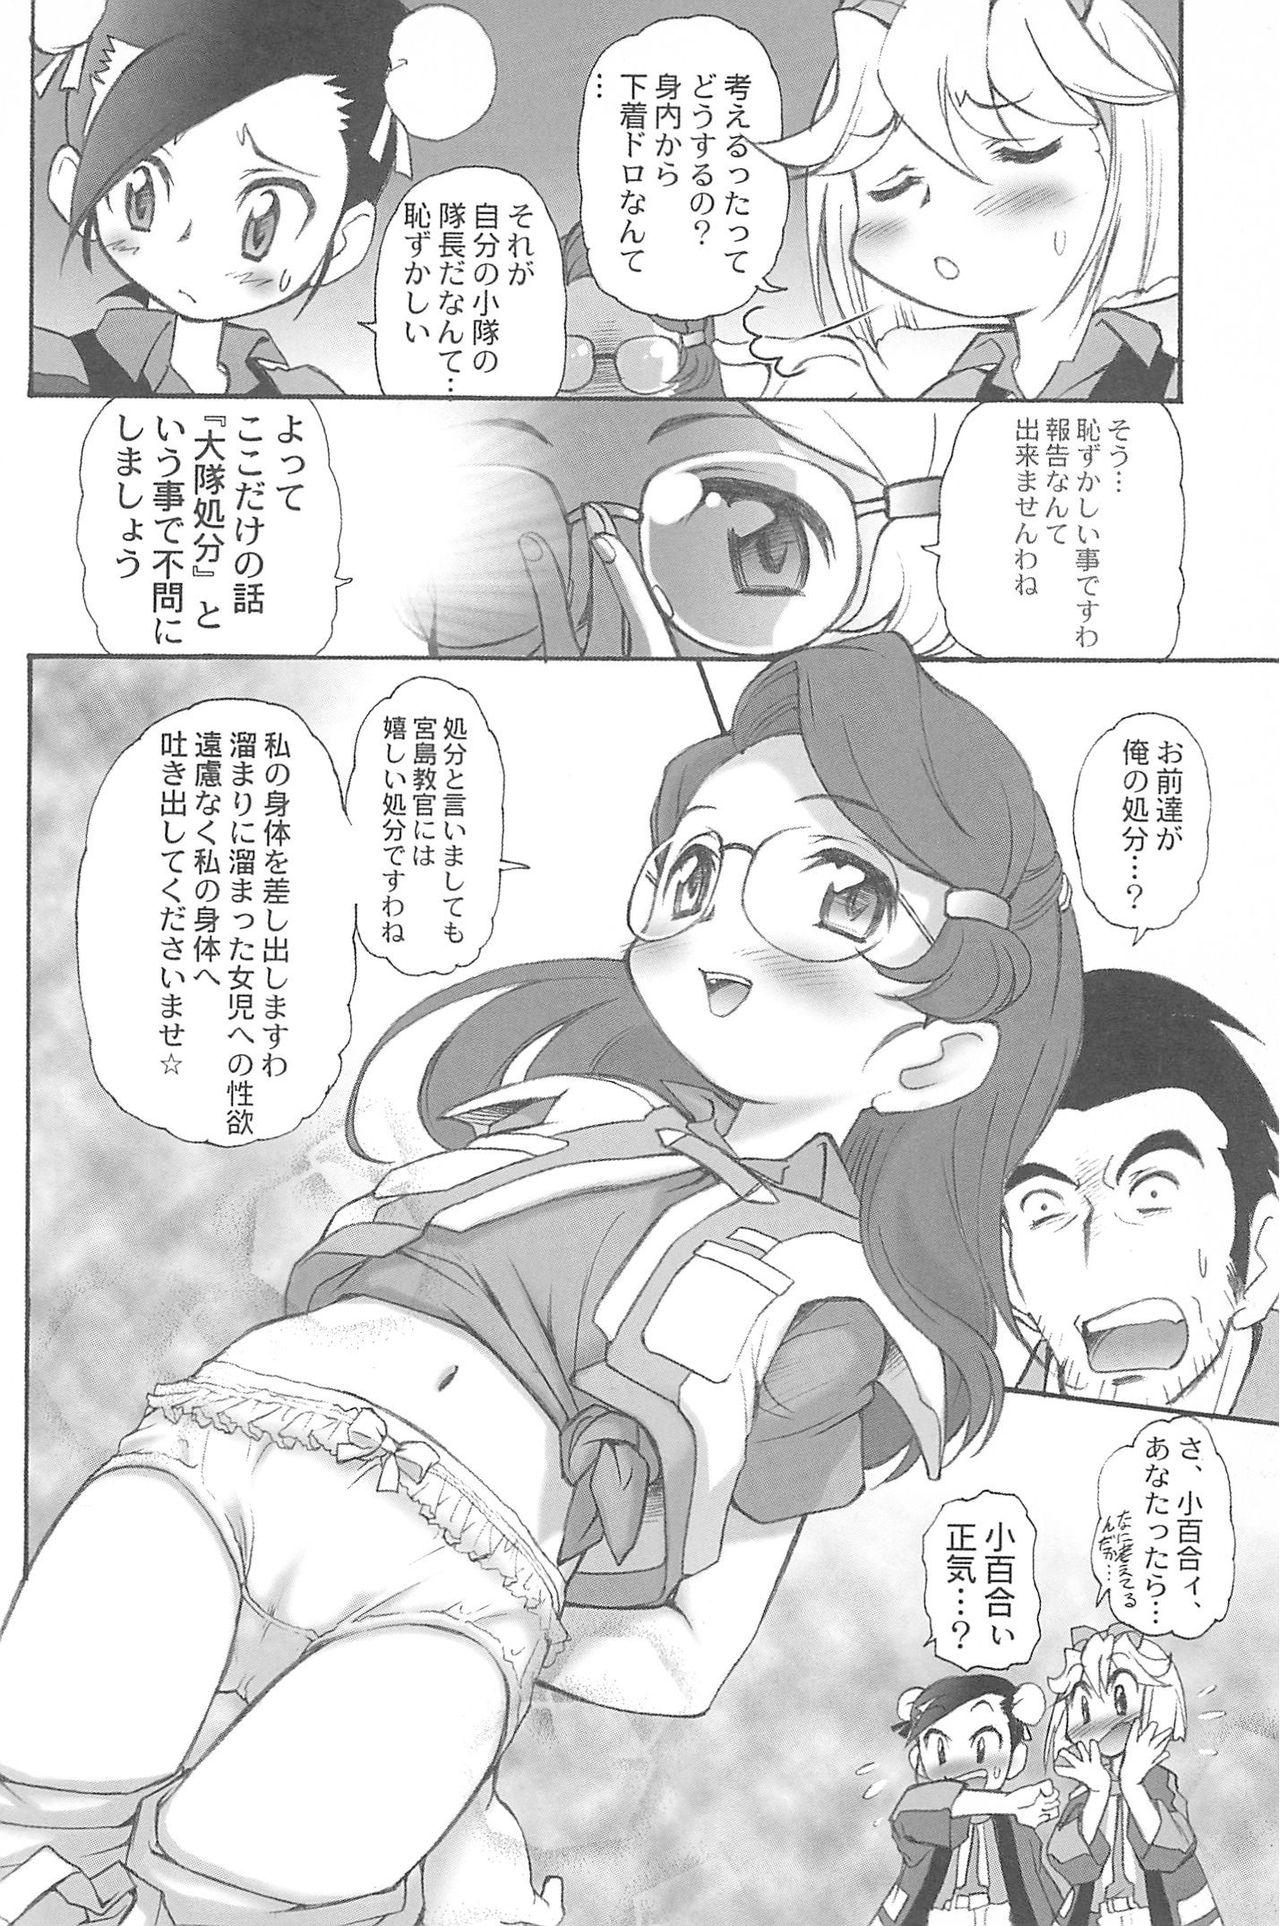 Ariake International X-rated Manga Festival Mercy Rabbit SPECIAL 77